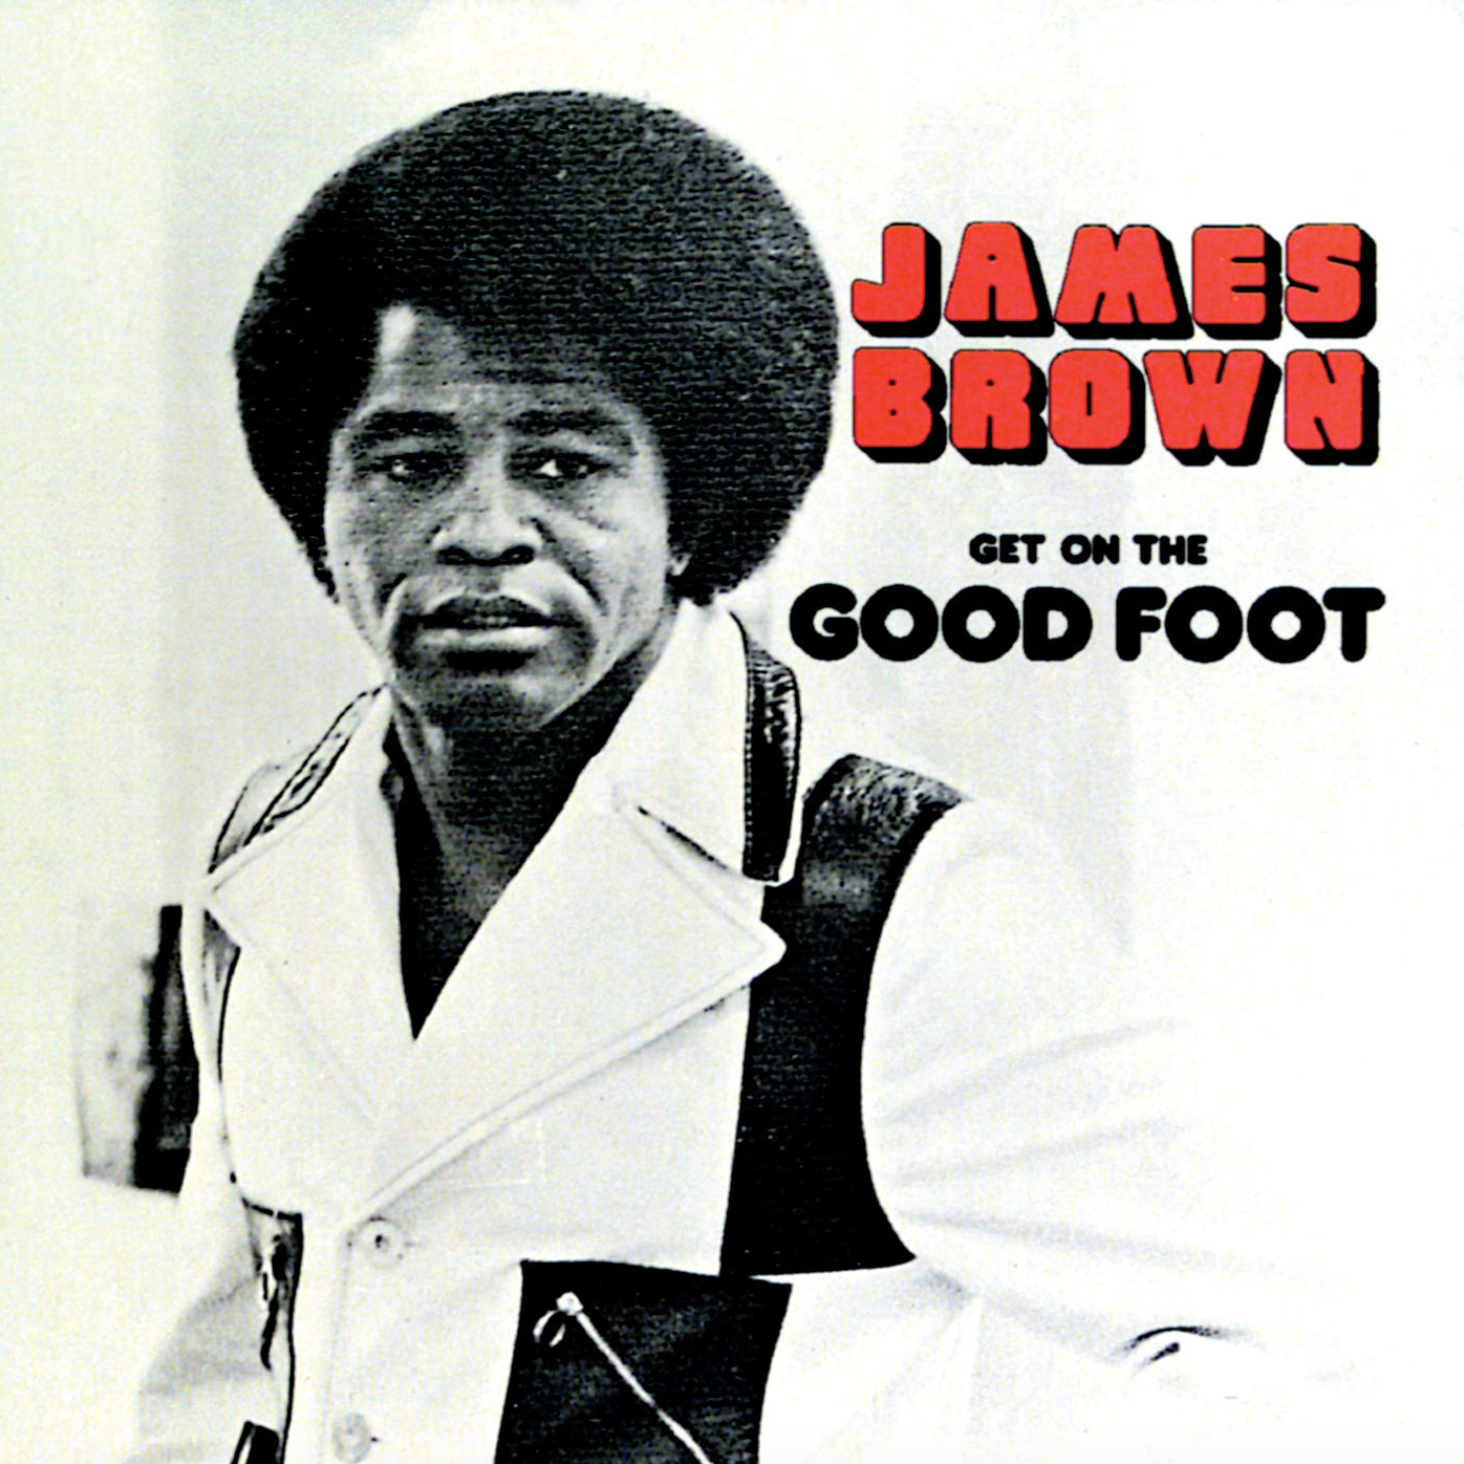 James Brown- Get on the Good